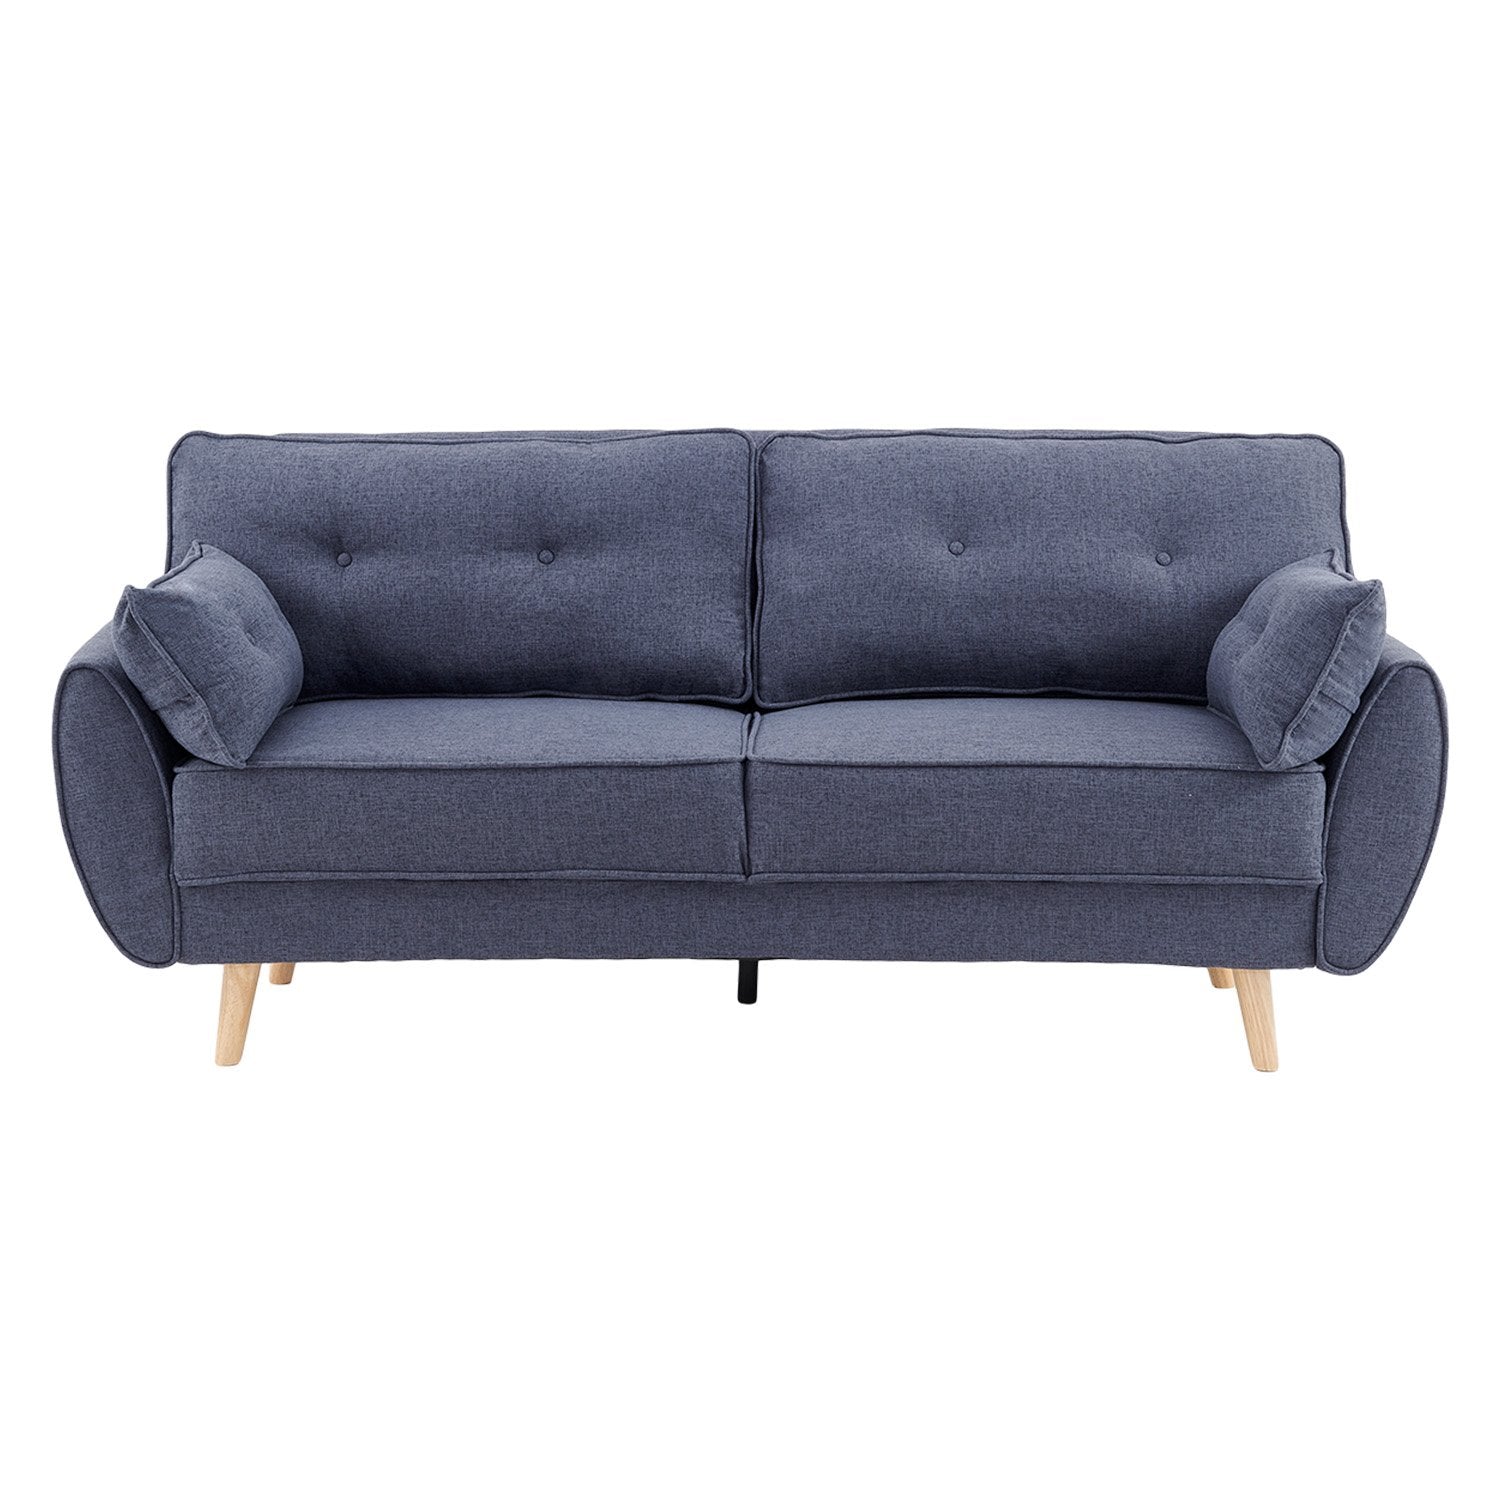 3 Seater Modular Linen Fabric Sofa Bed Couch Futon Suite - Dark Grey